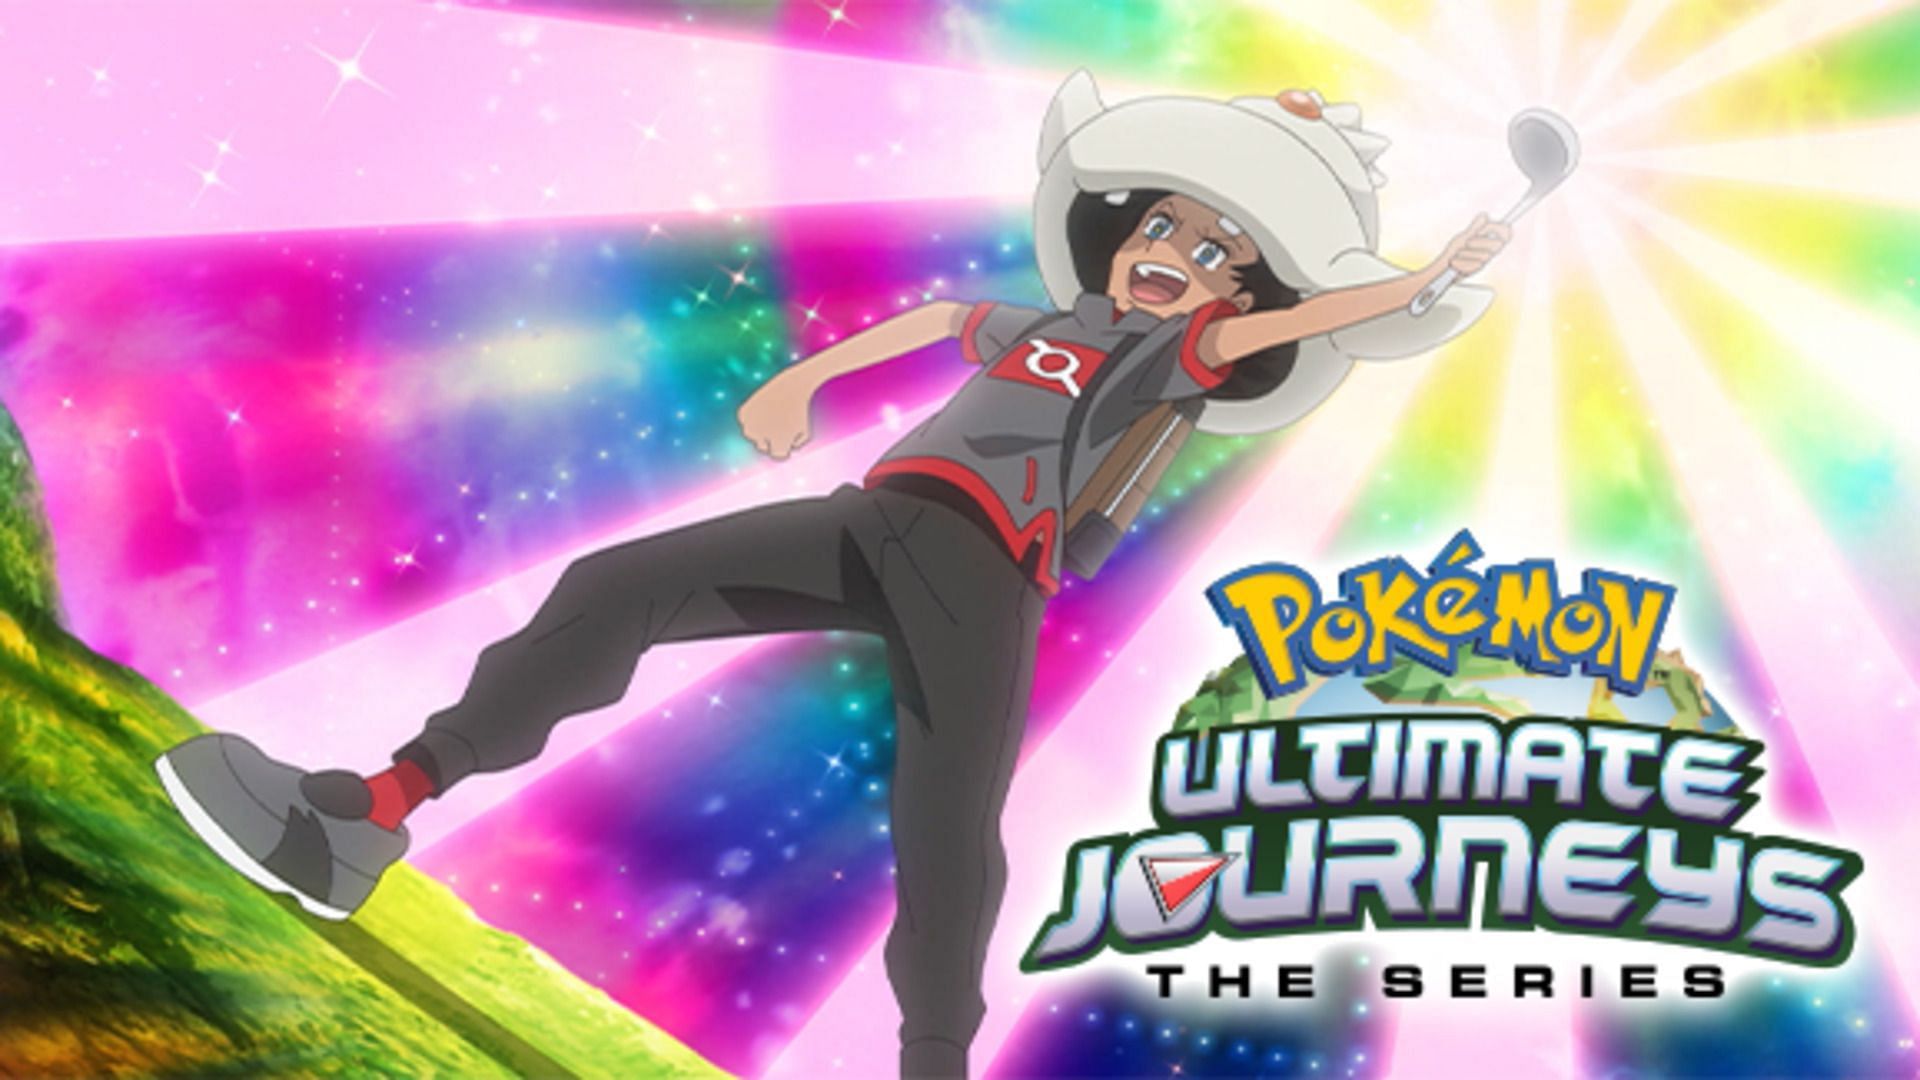 First 12 episodes of Pokémon Ultimate Journeys heading to Netflix